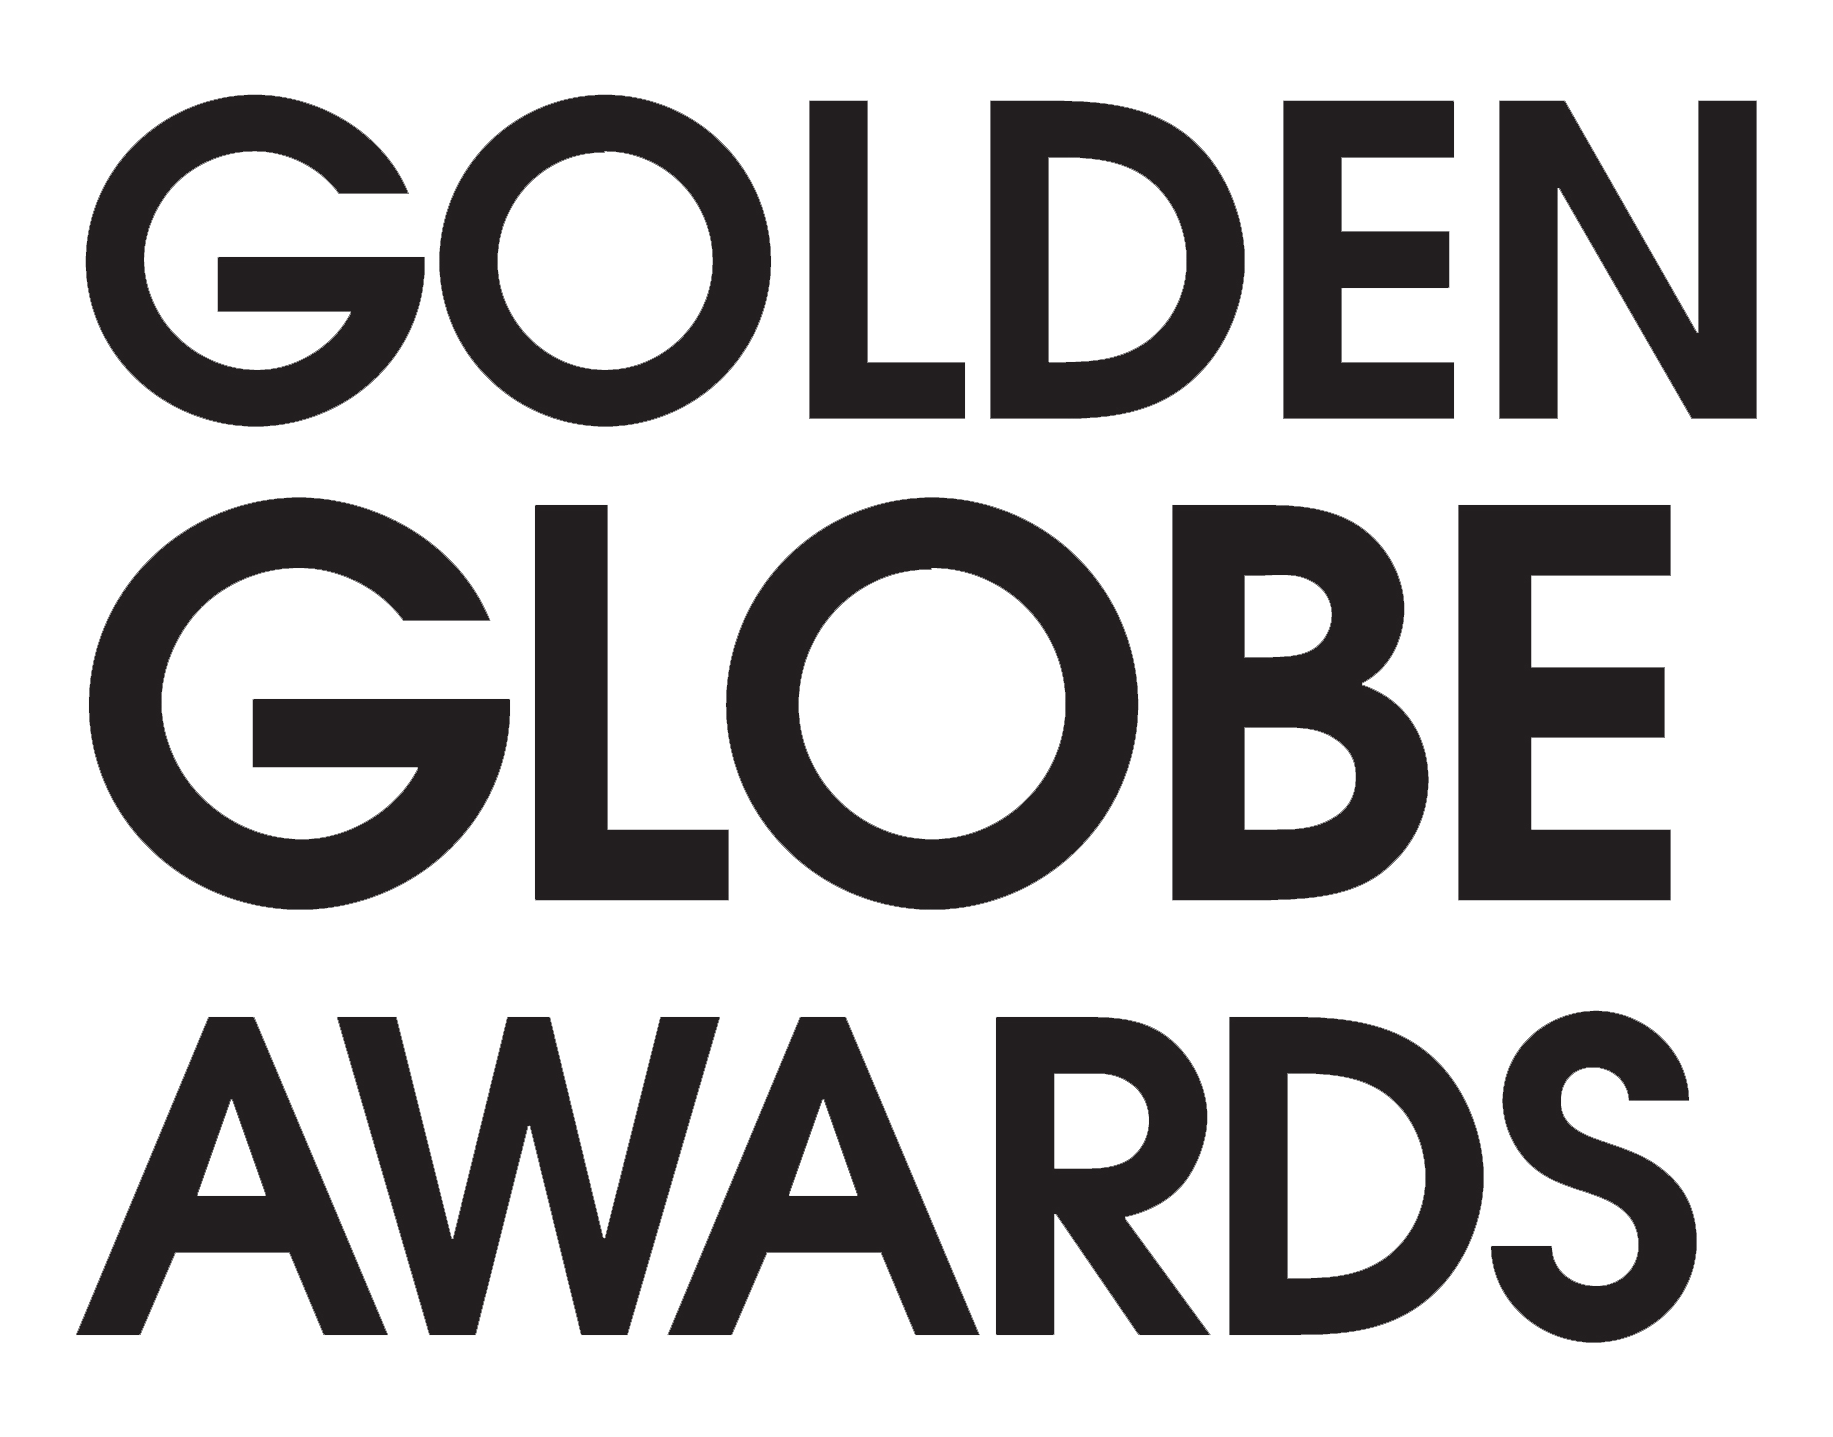 Golden Globes Logo - File:Golden Globe text logo.png - Wikimedia Commons